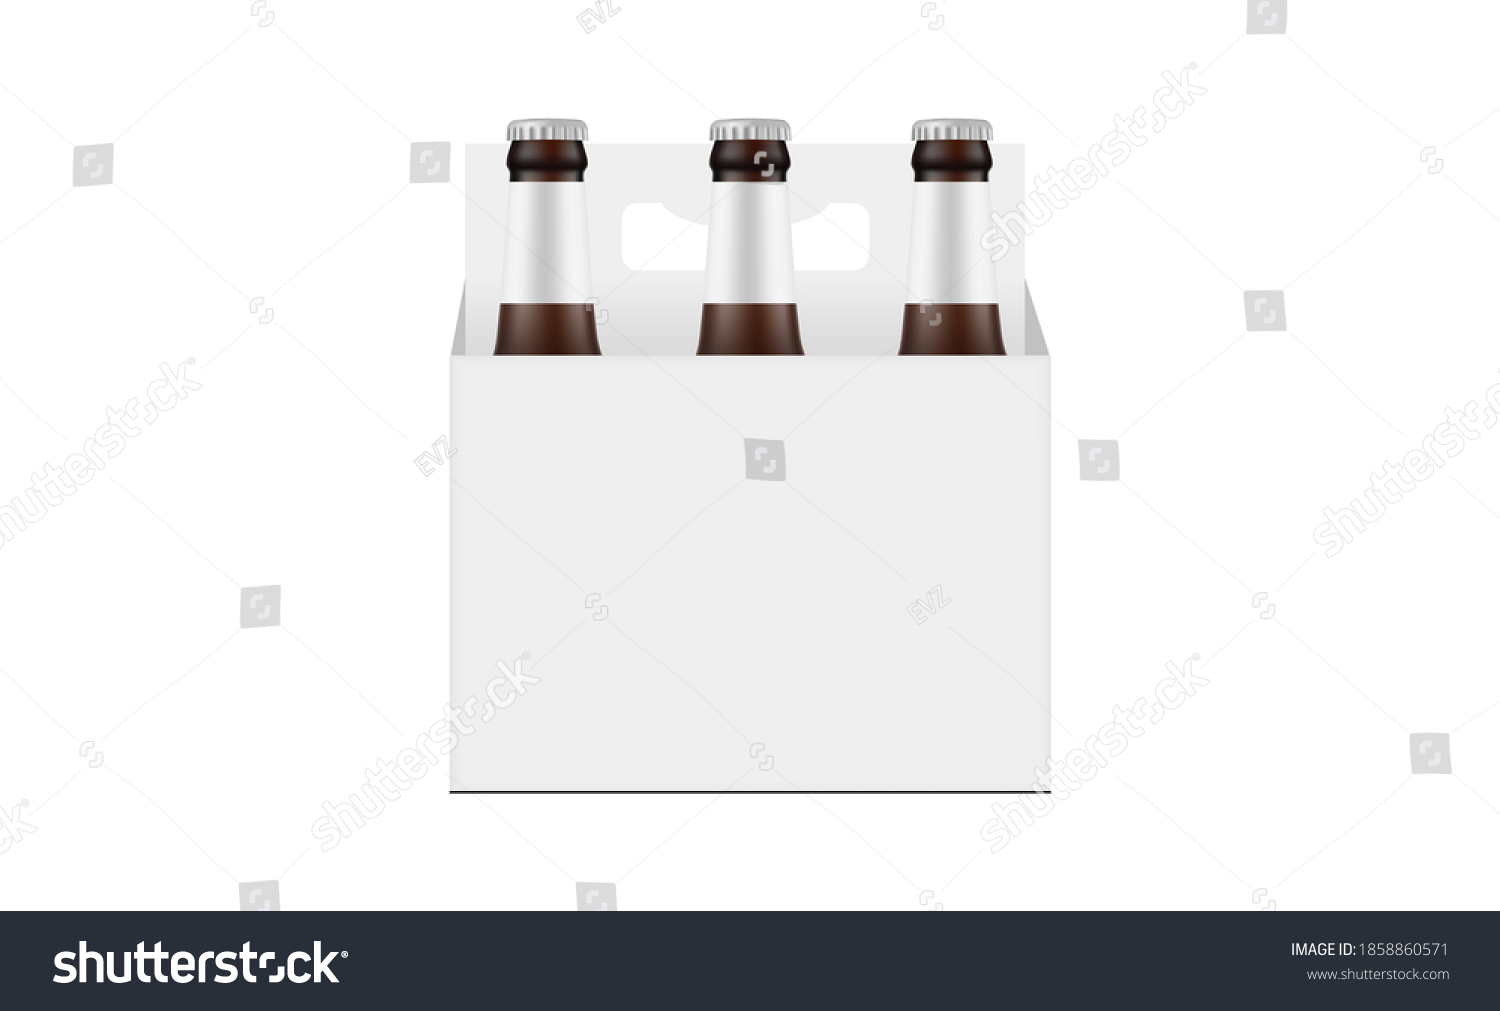 SVG of Paper Beer Bottle Carrier Packaging Box Mockup Isolated on White Background. Vector Illustration svg